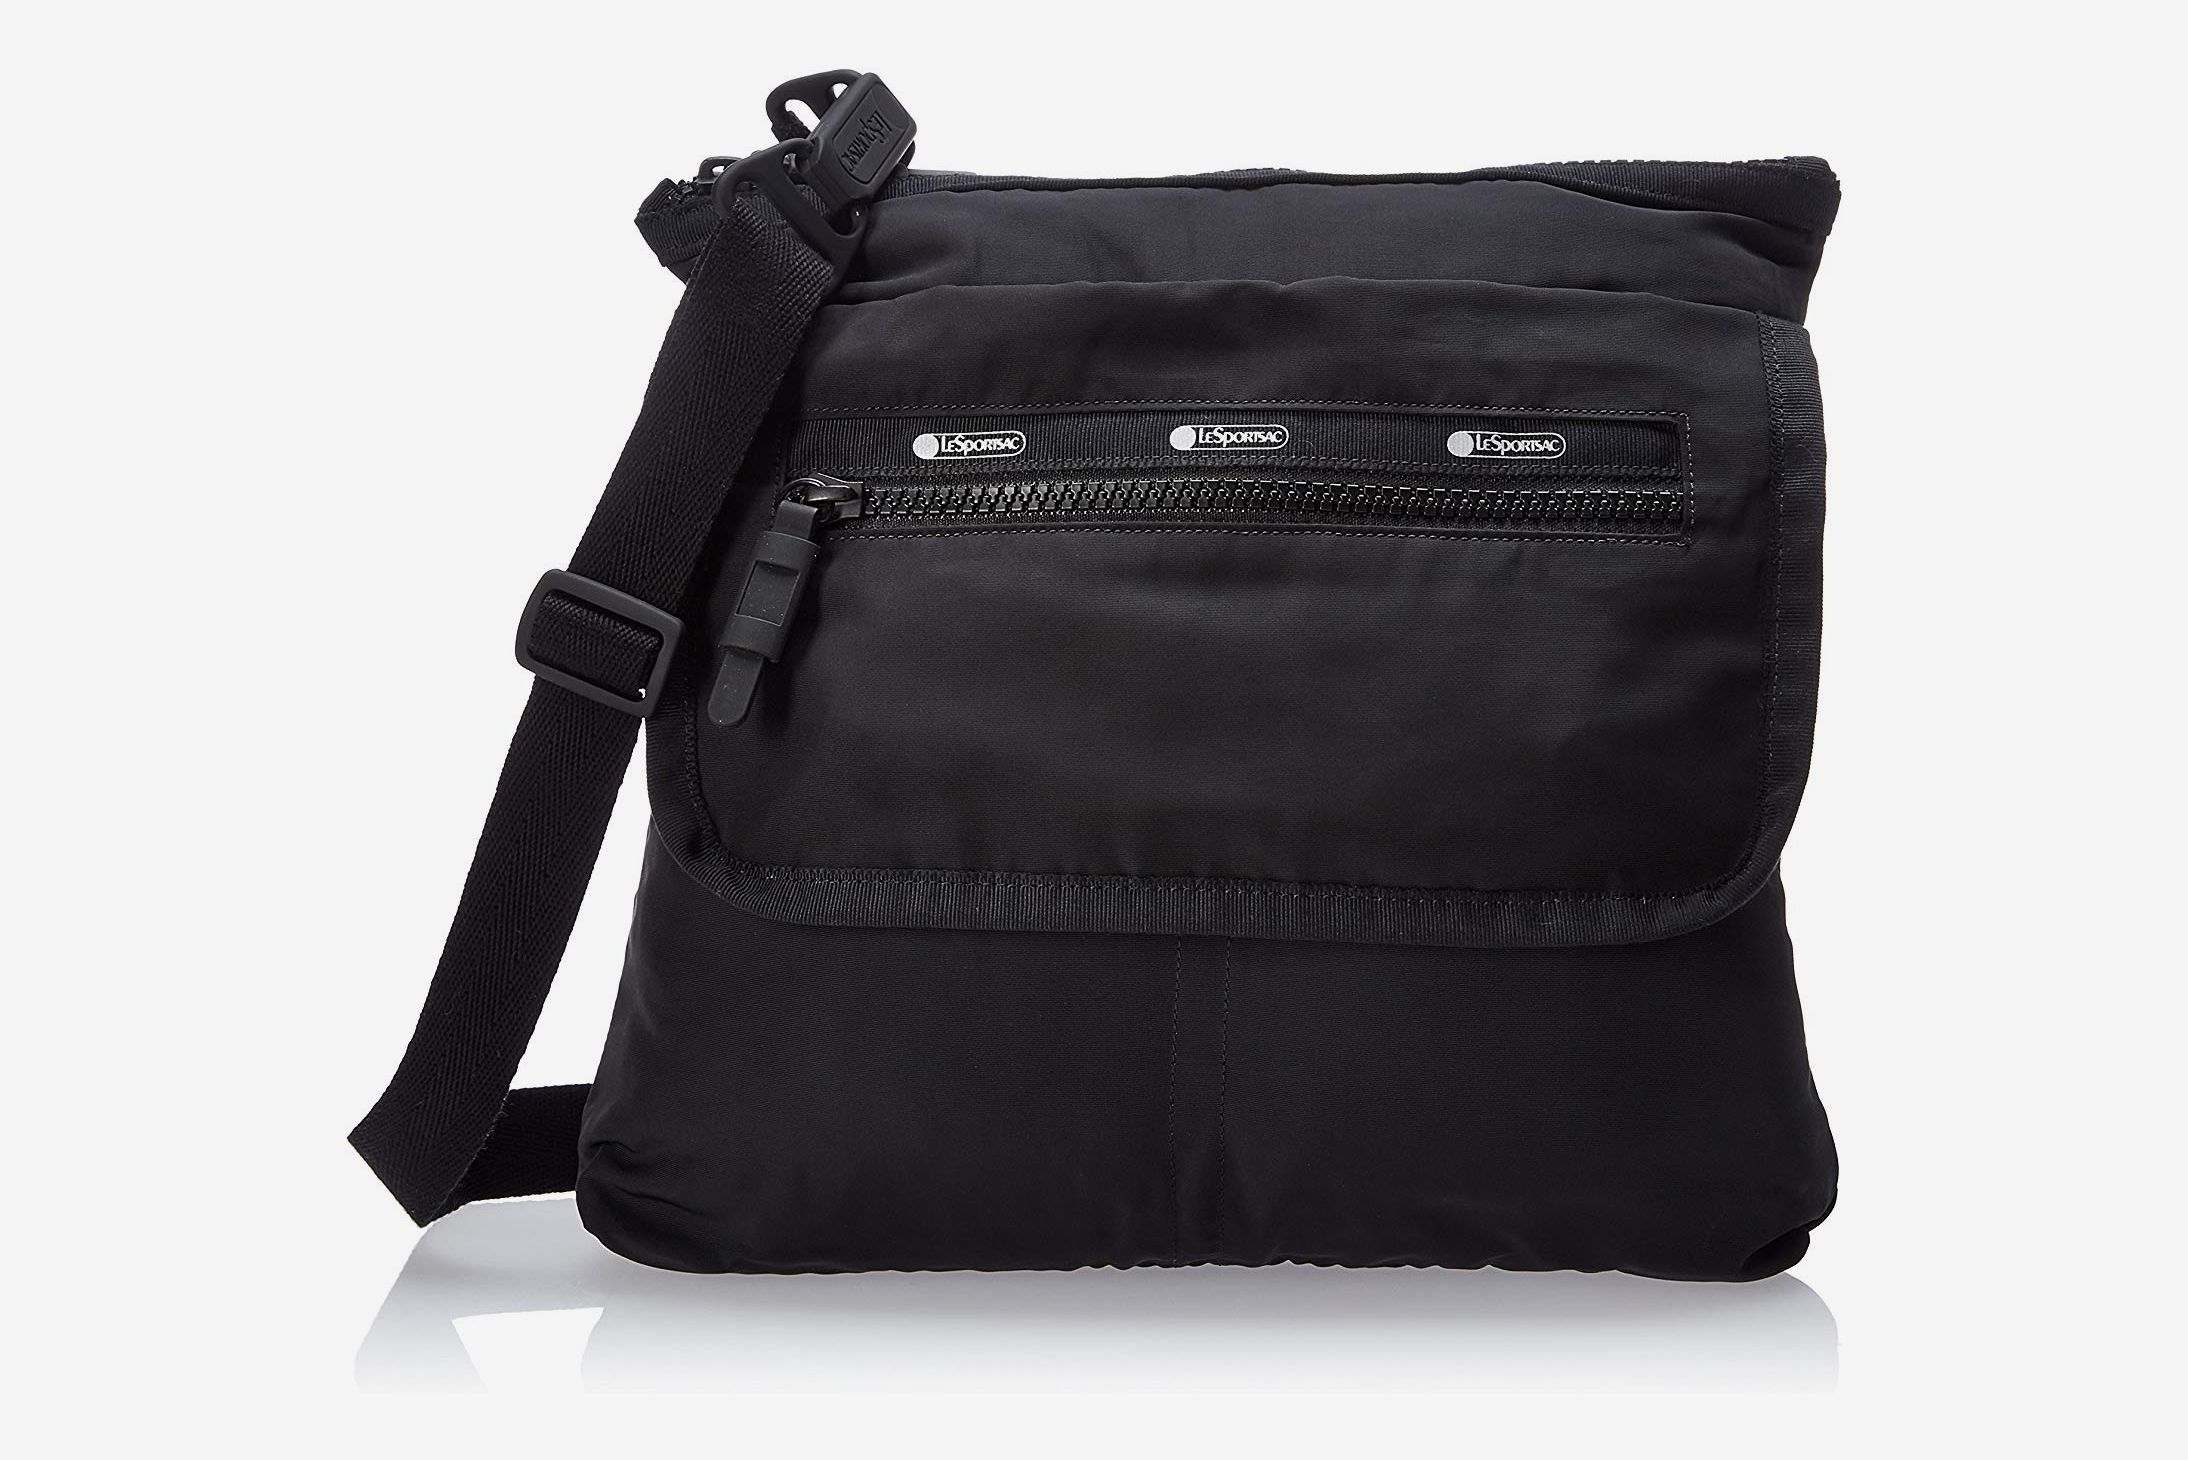 Crossbody Bag Grey White Multi Pockets Adjustable Strap Lined Lightweight Gift 